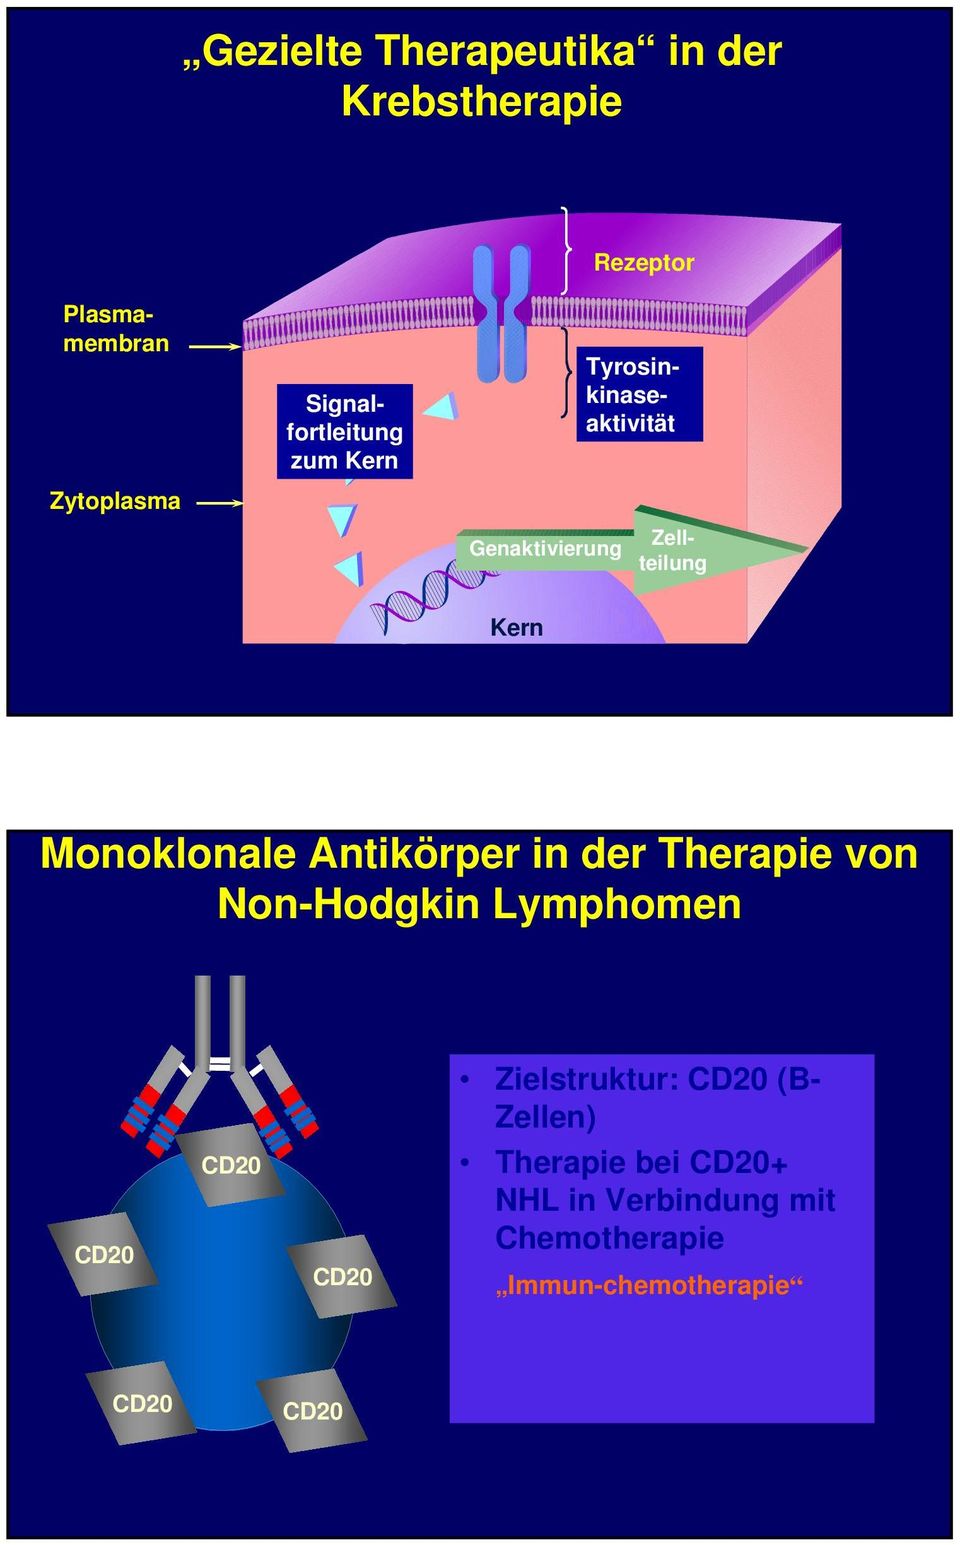 Antikörper in der Therapie von Non-Hodgkin Lymphomen CD20 CD20 CD20 Zielstruktur: CD20